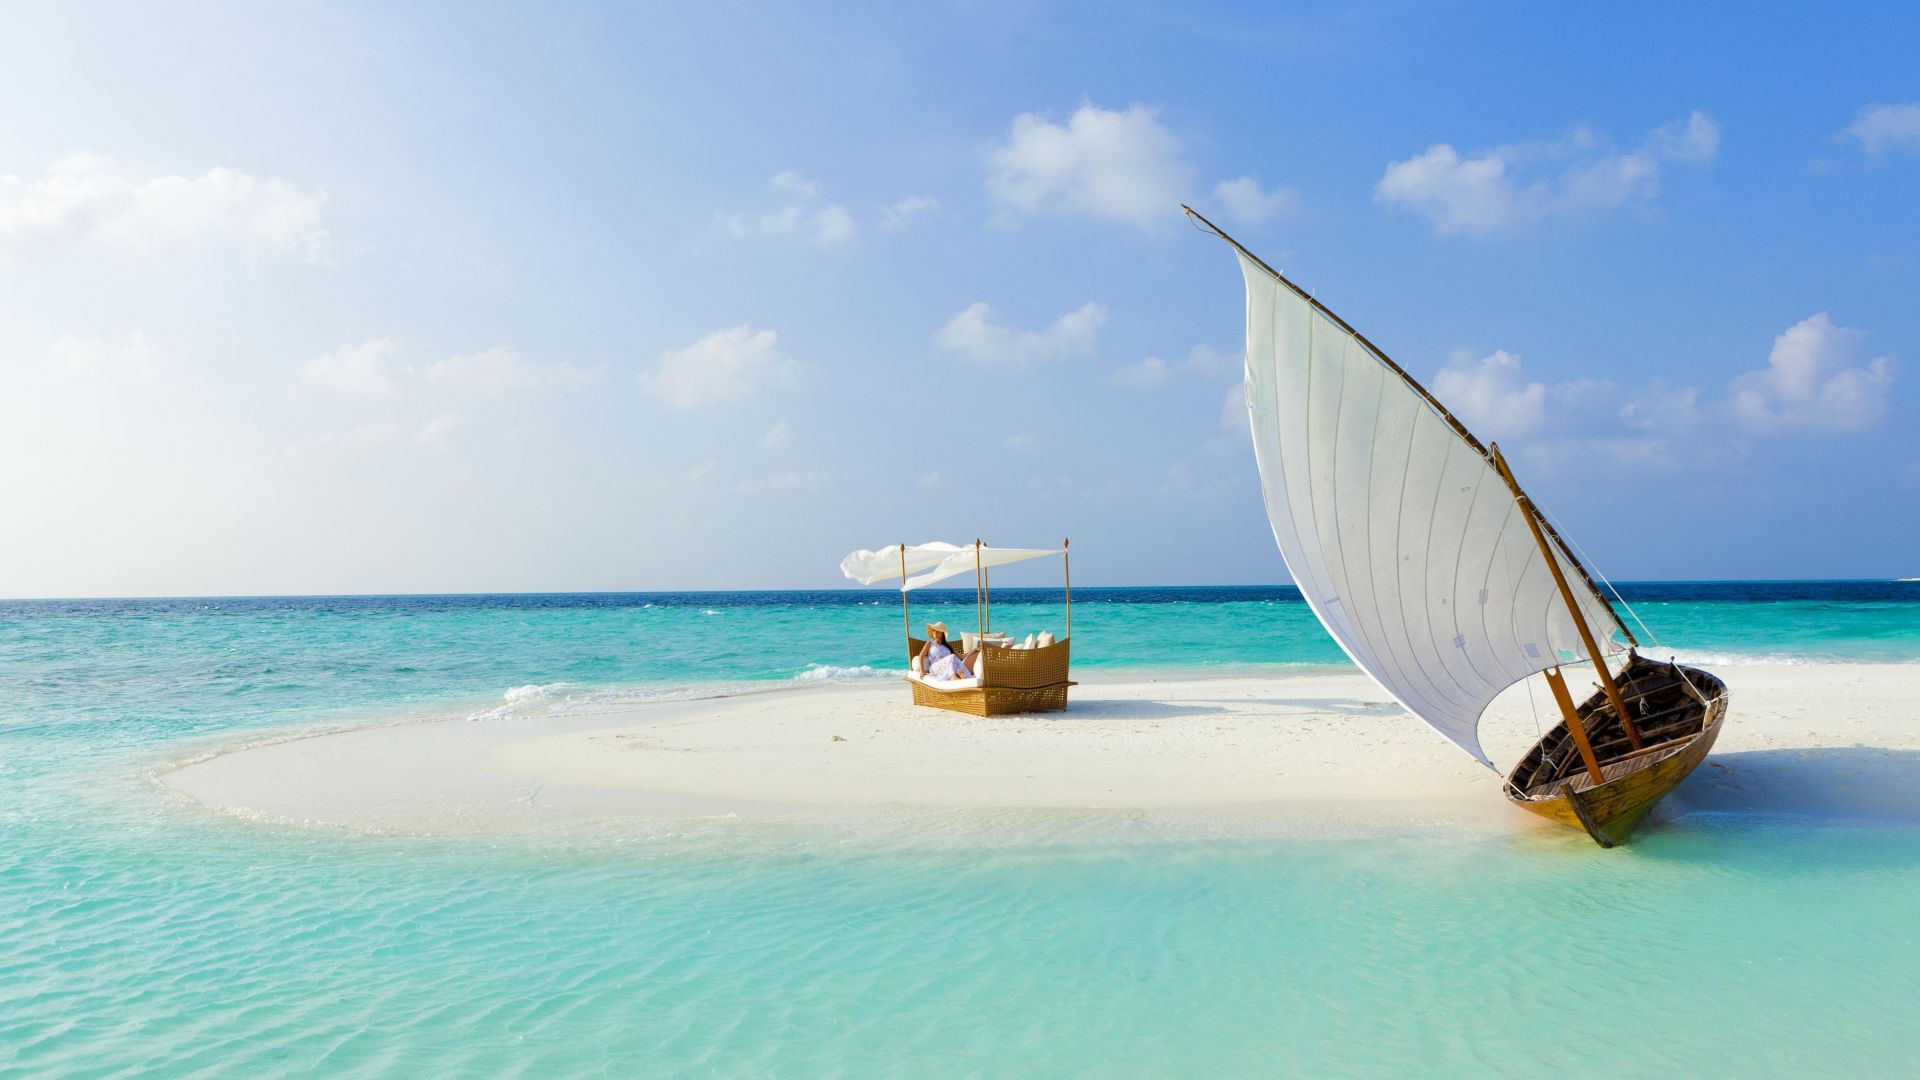 Desktop Wallpaper Maldives Beach, Island, Beach, Ship, Holiday, HD Image, Picture, Background, 2dimlu